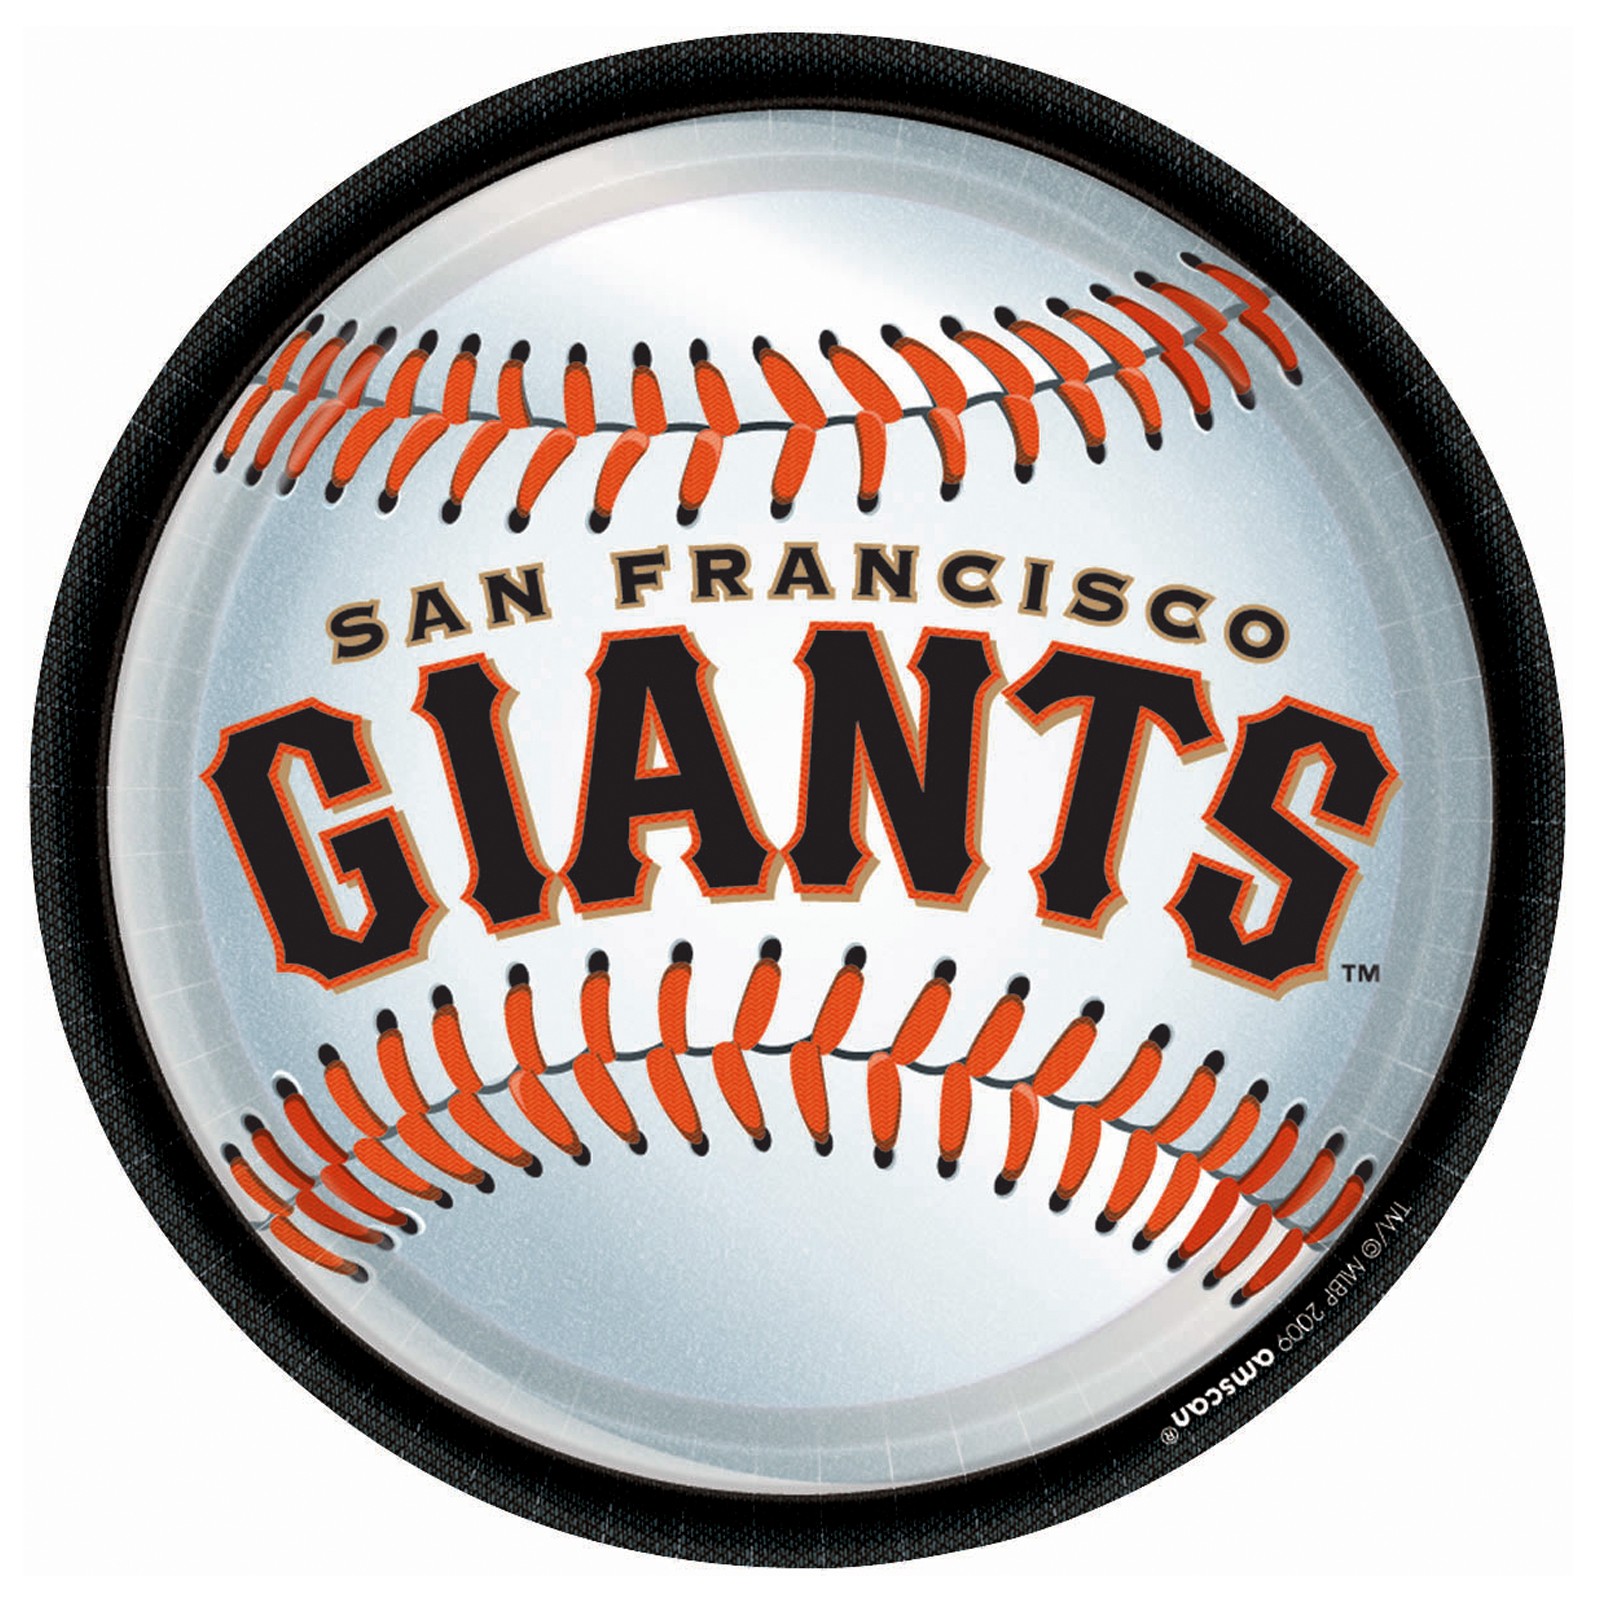 San Francisco Giants #7